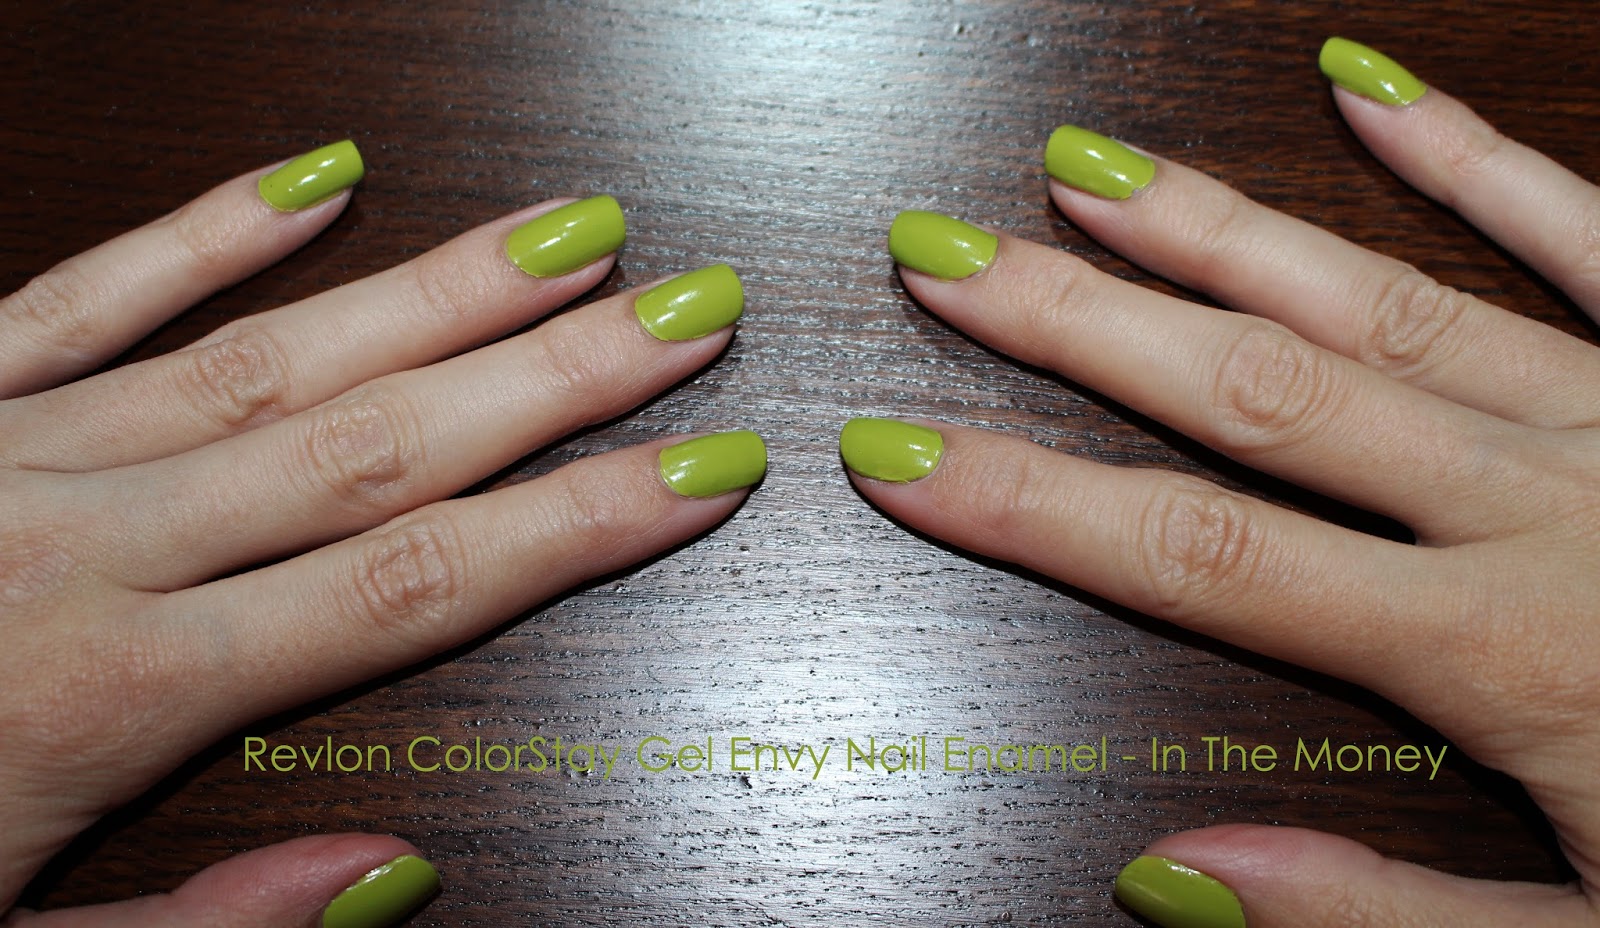 Revlon ColorStay Gel Envy Nail Polish in Mint Color - wide 1